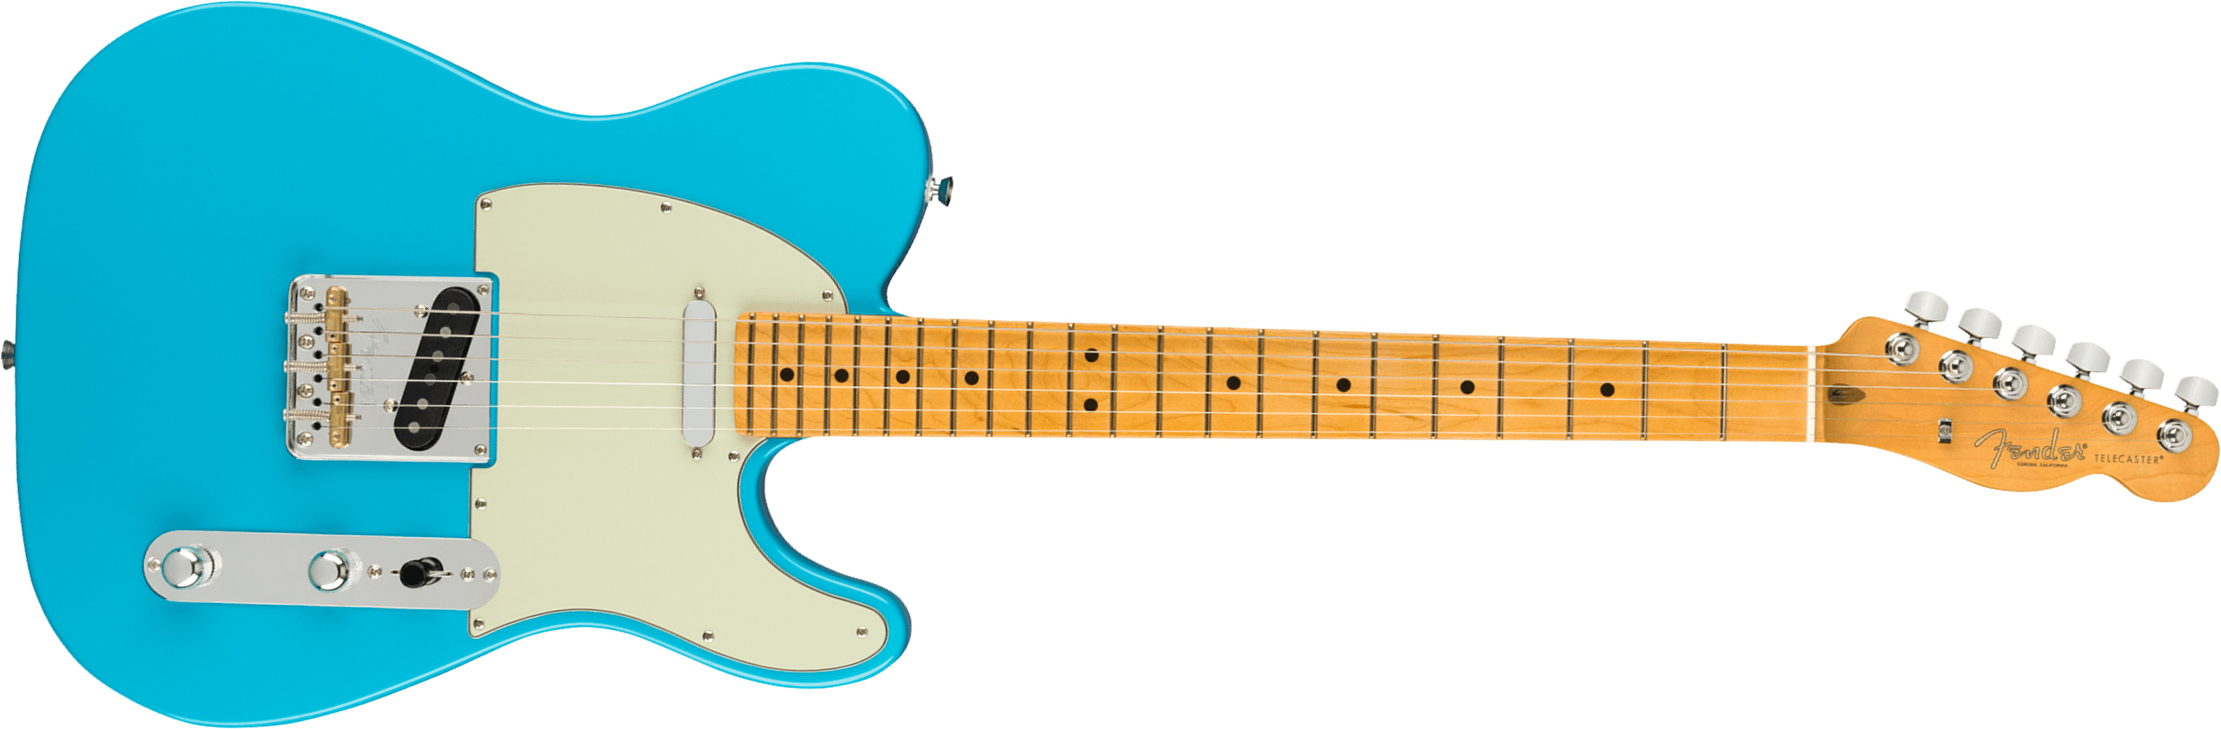 Fender Tele American Professional Ii Usa Mn - Miami Blue - Guitarra eléctrica con forma de tel - Main picture